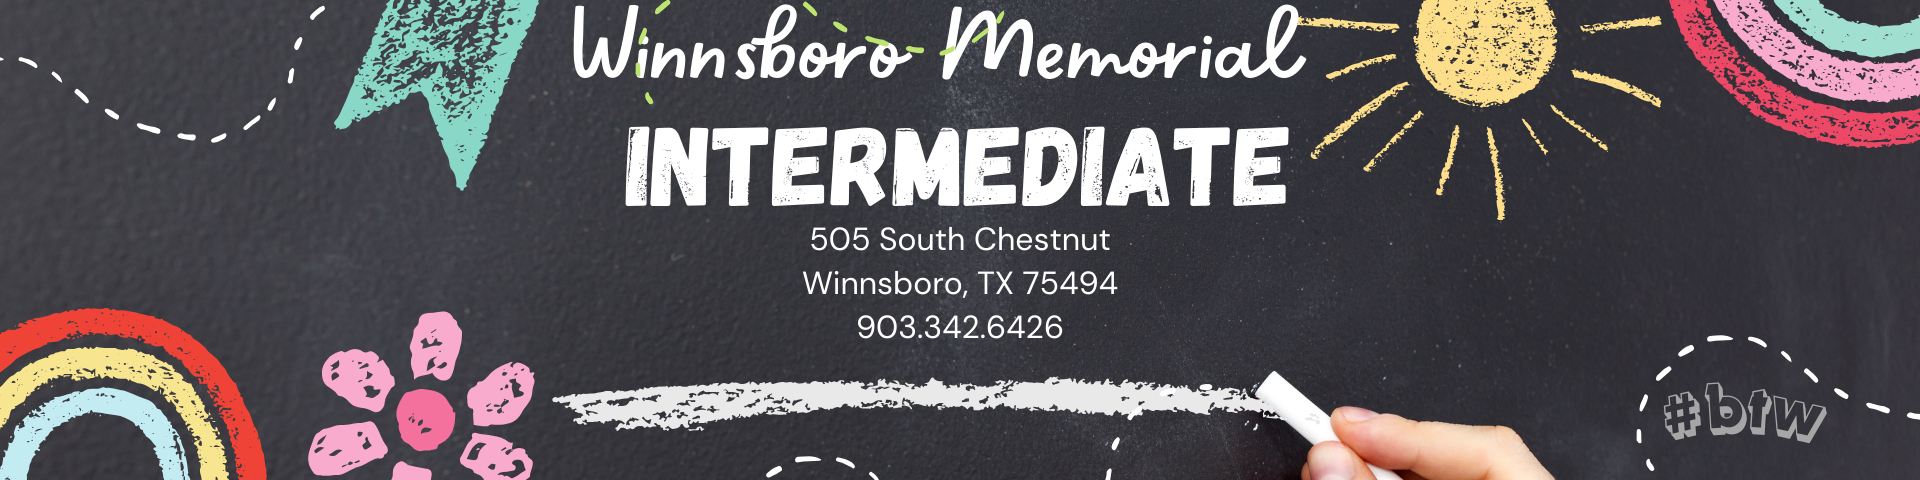 Winnsboro Memorial Intermediate